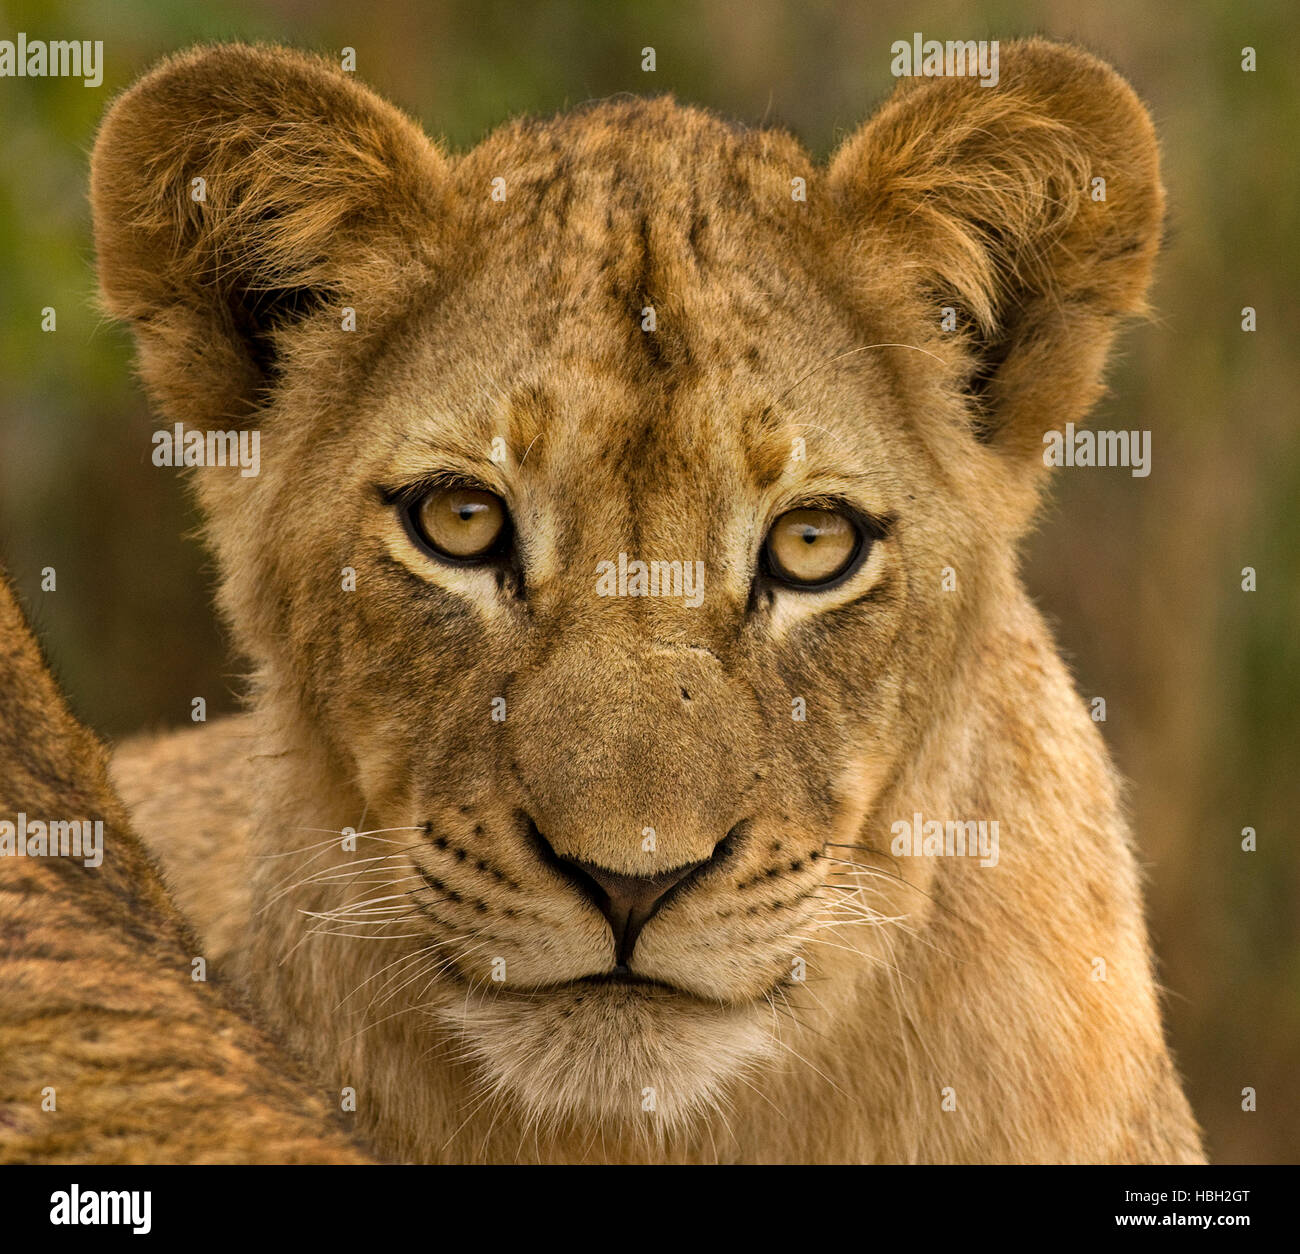 Lion Cub (Panthera leo) close up portrait Stock Photo